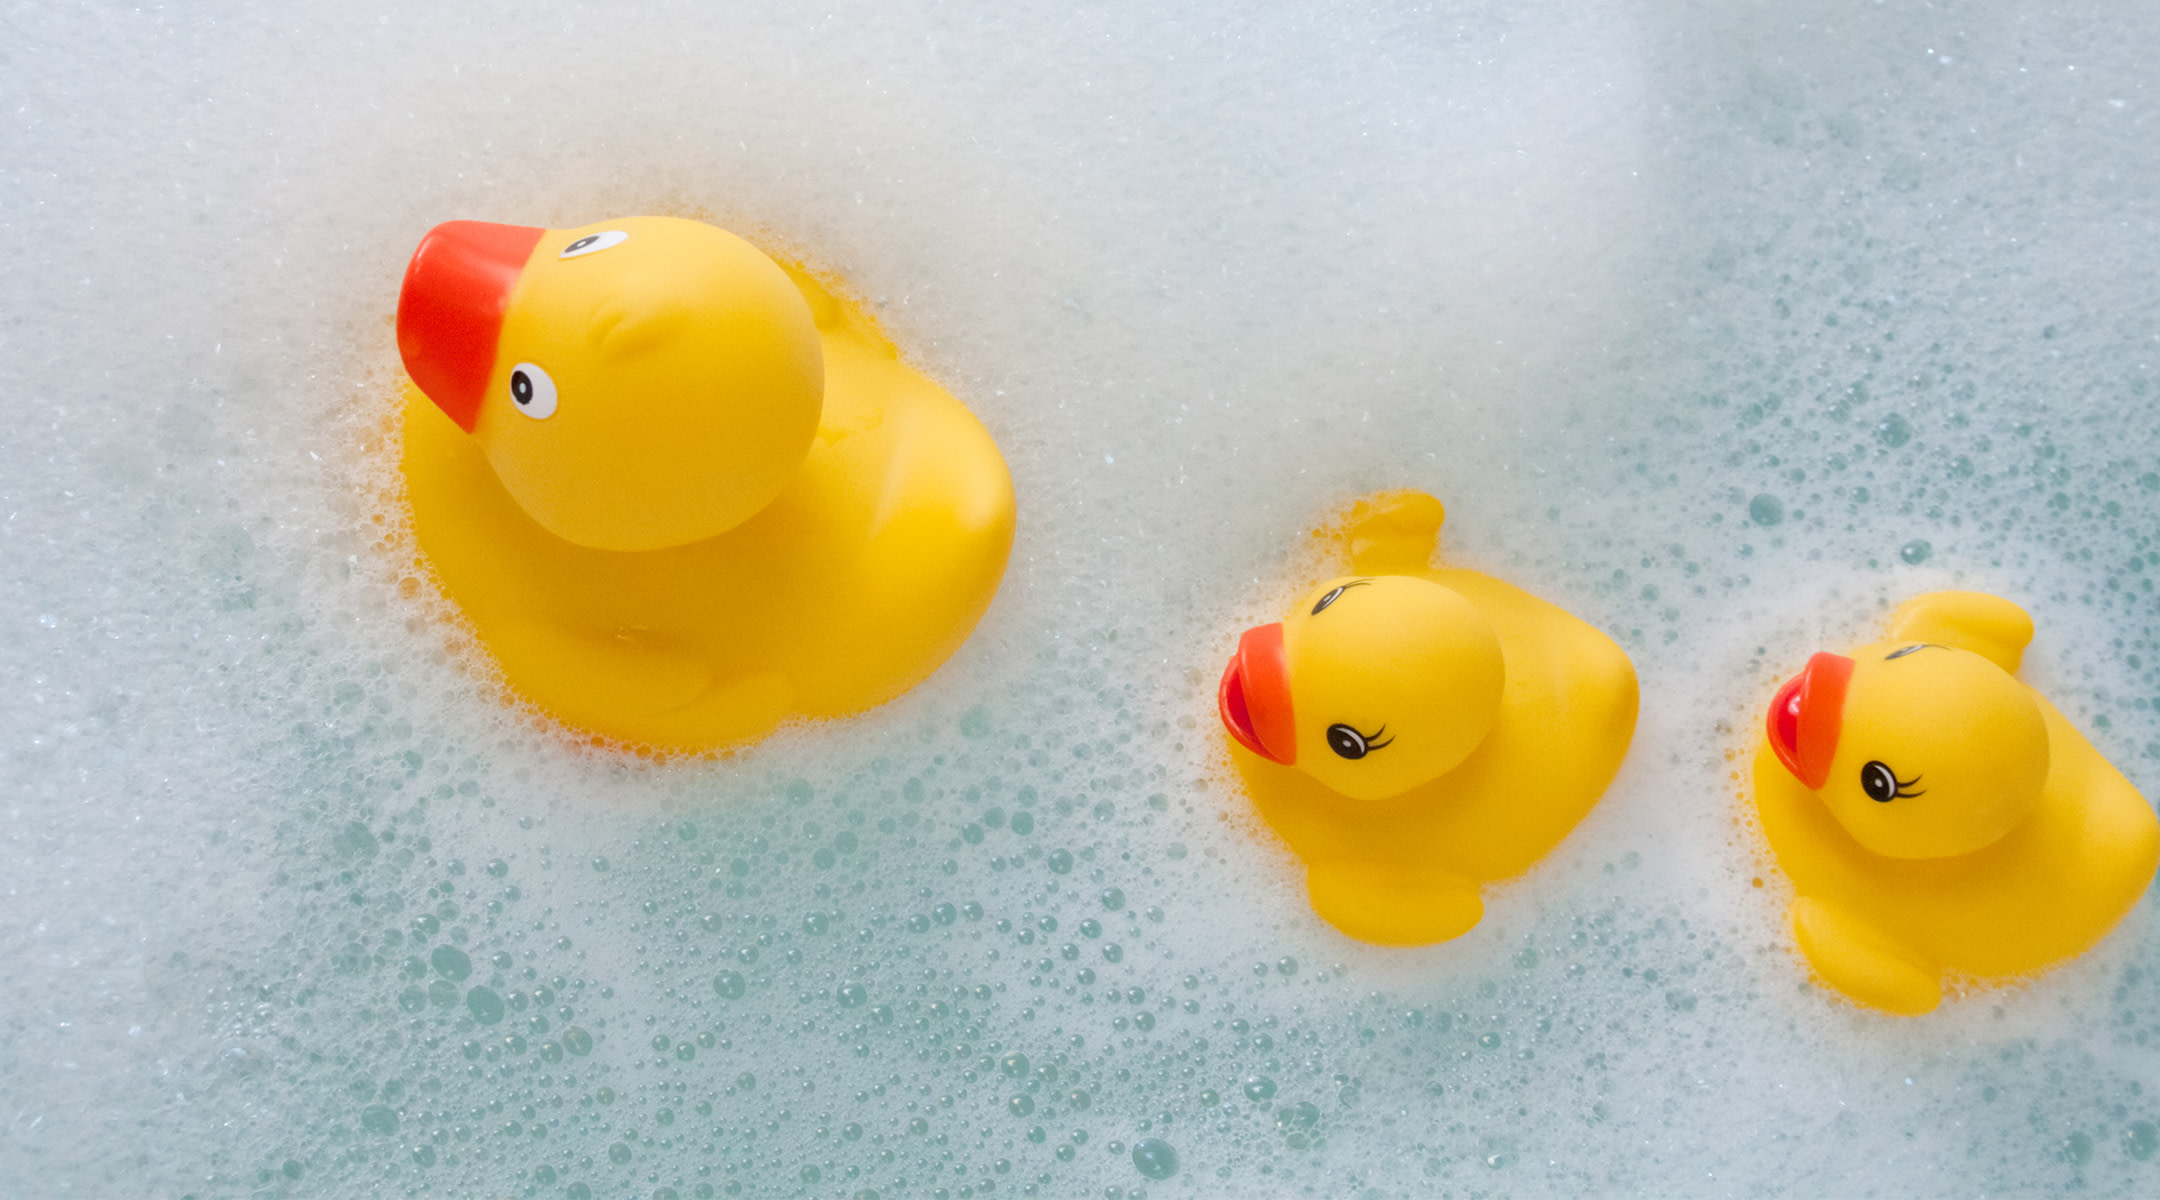 rubber ducks in sudsy bath